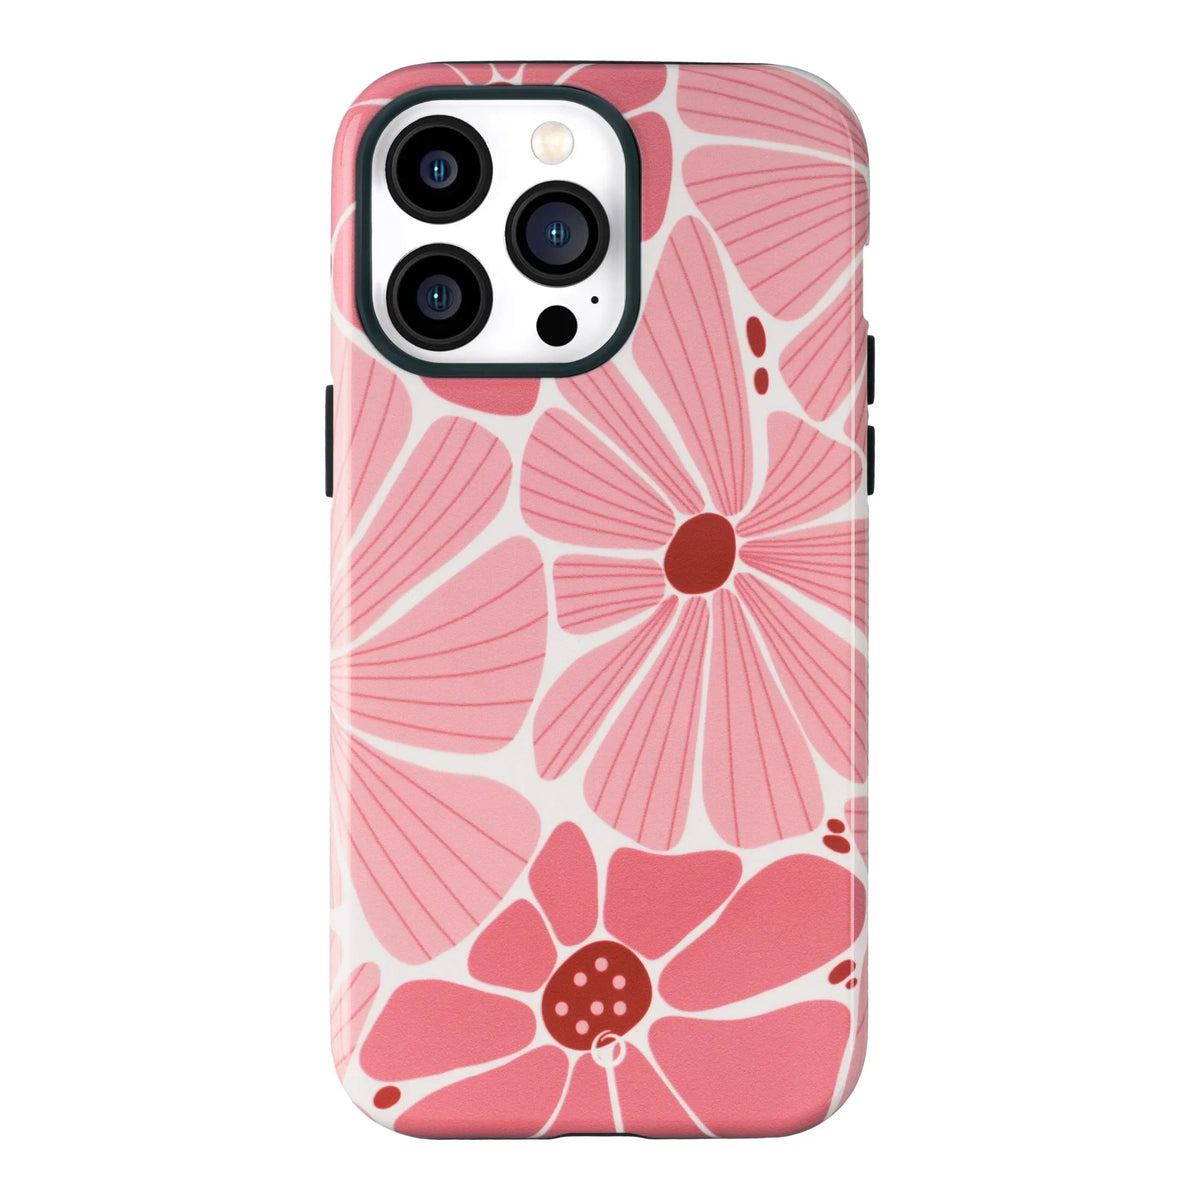 Floral Blast iPhone Case - iPhone 11 Pro Max